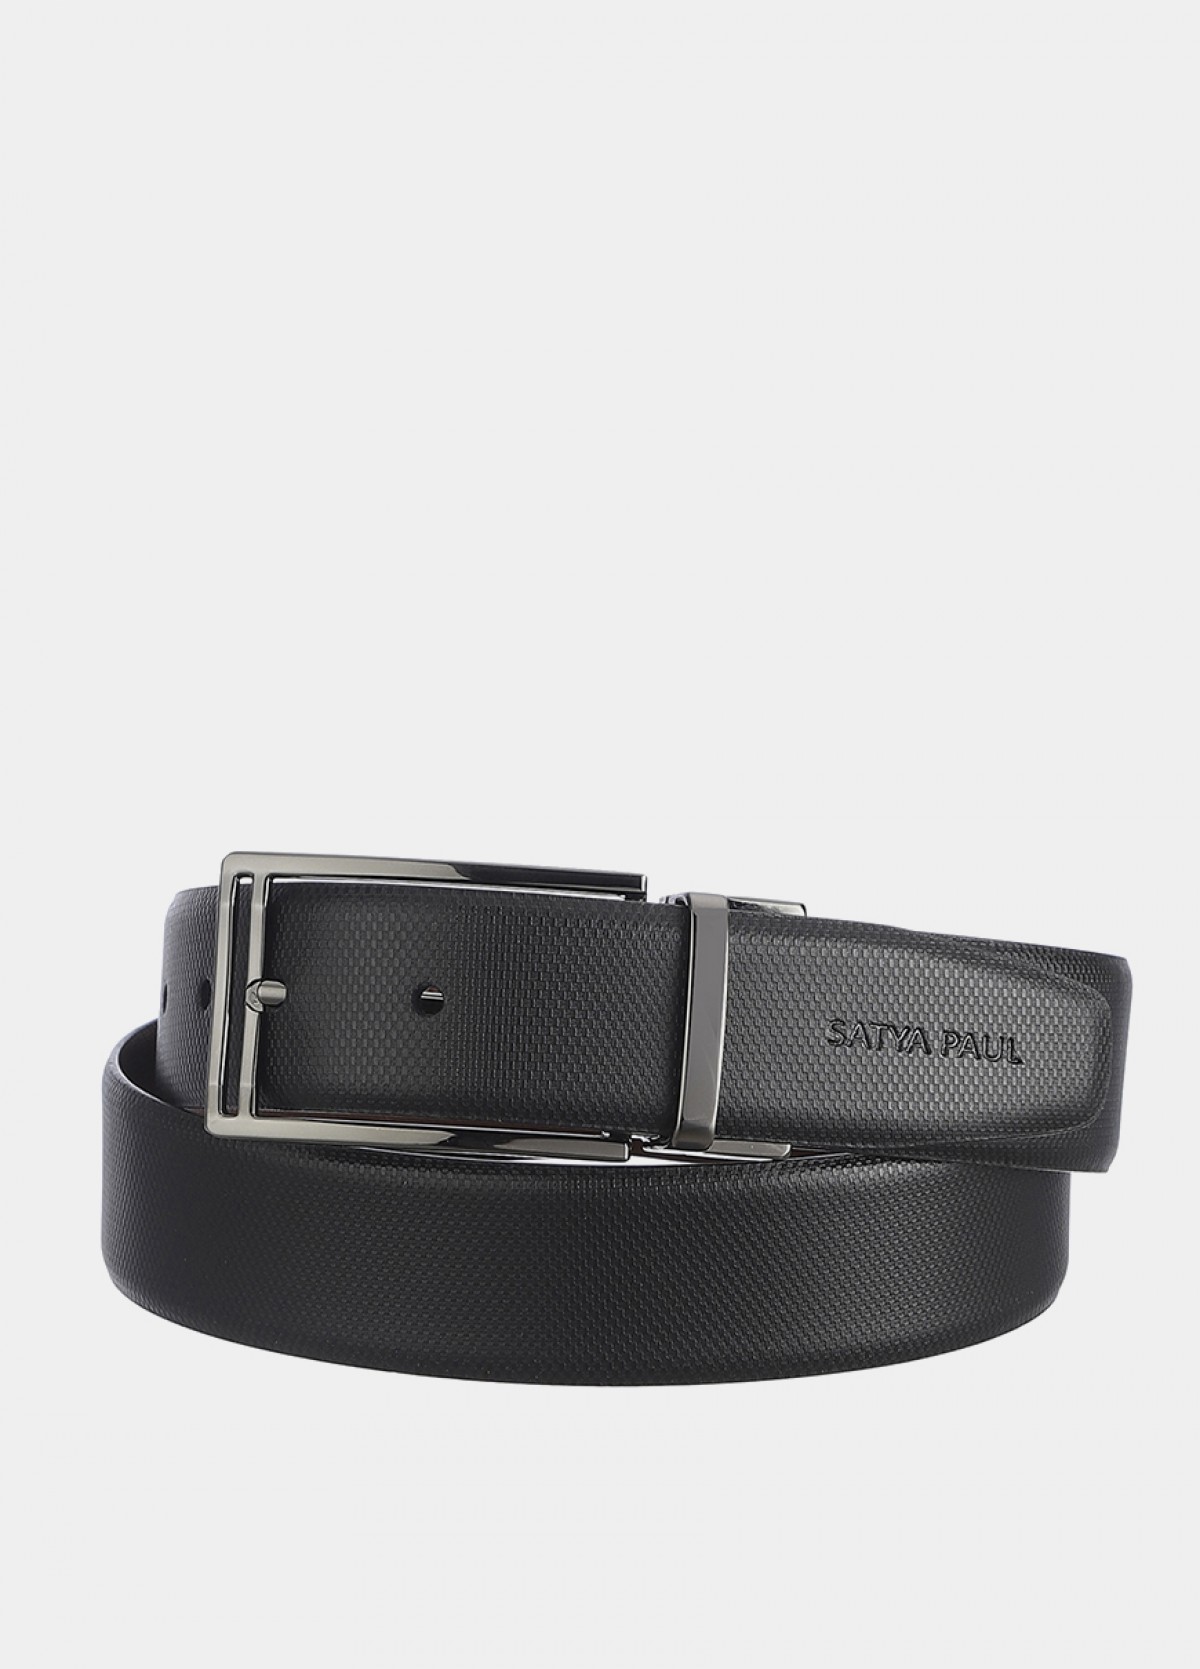 The Reversible Black Leather Belt